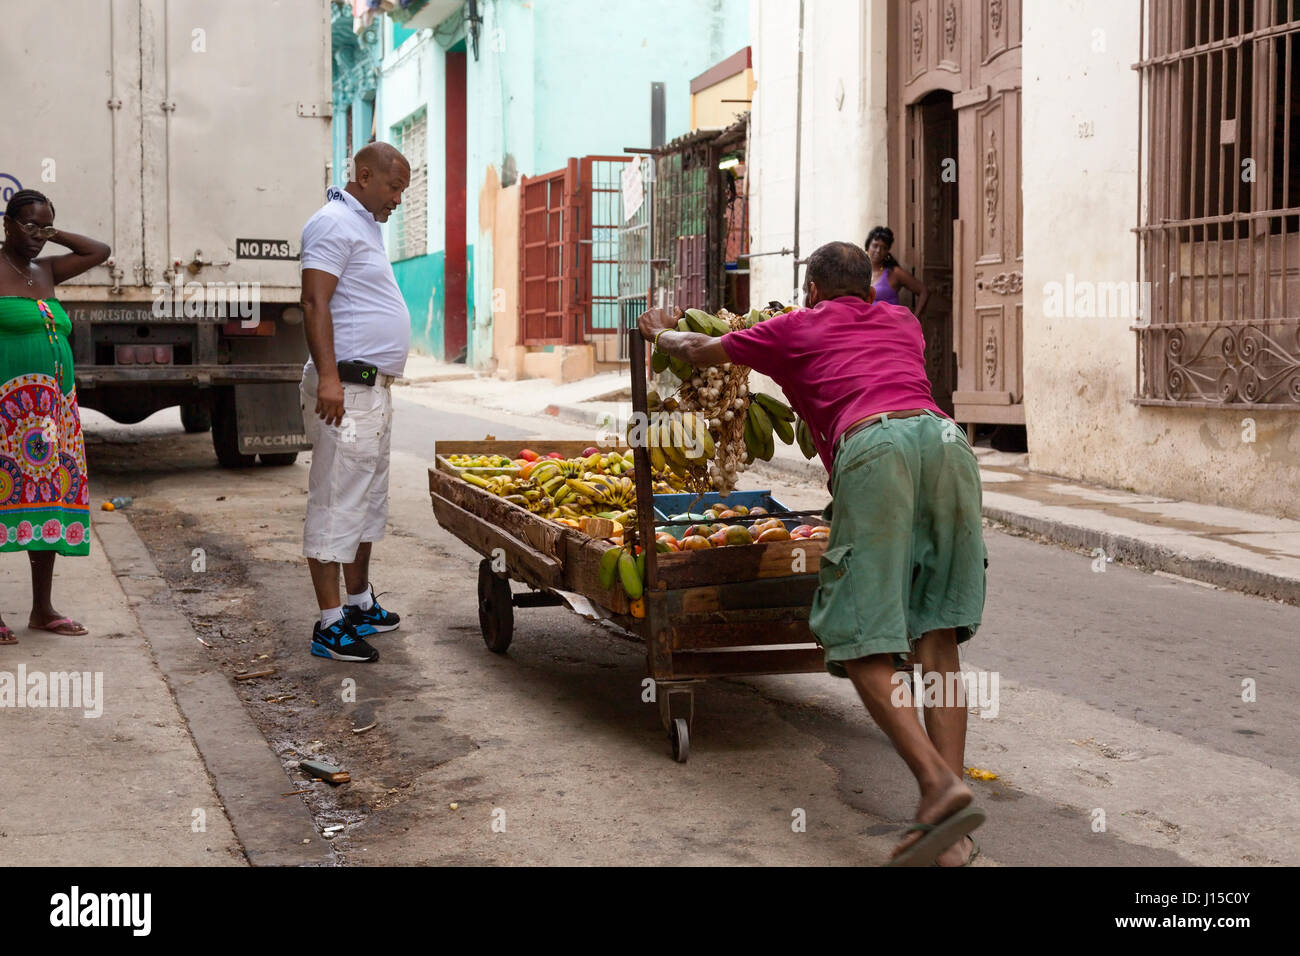 A man pushing a fruit cart in the street in Havana, Cuba. Stock Photo